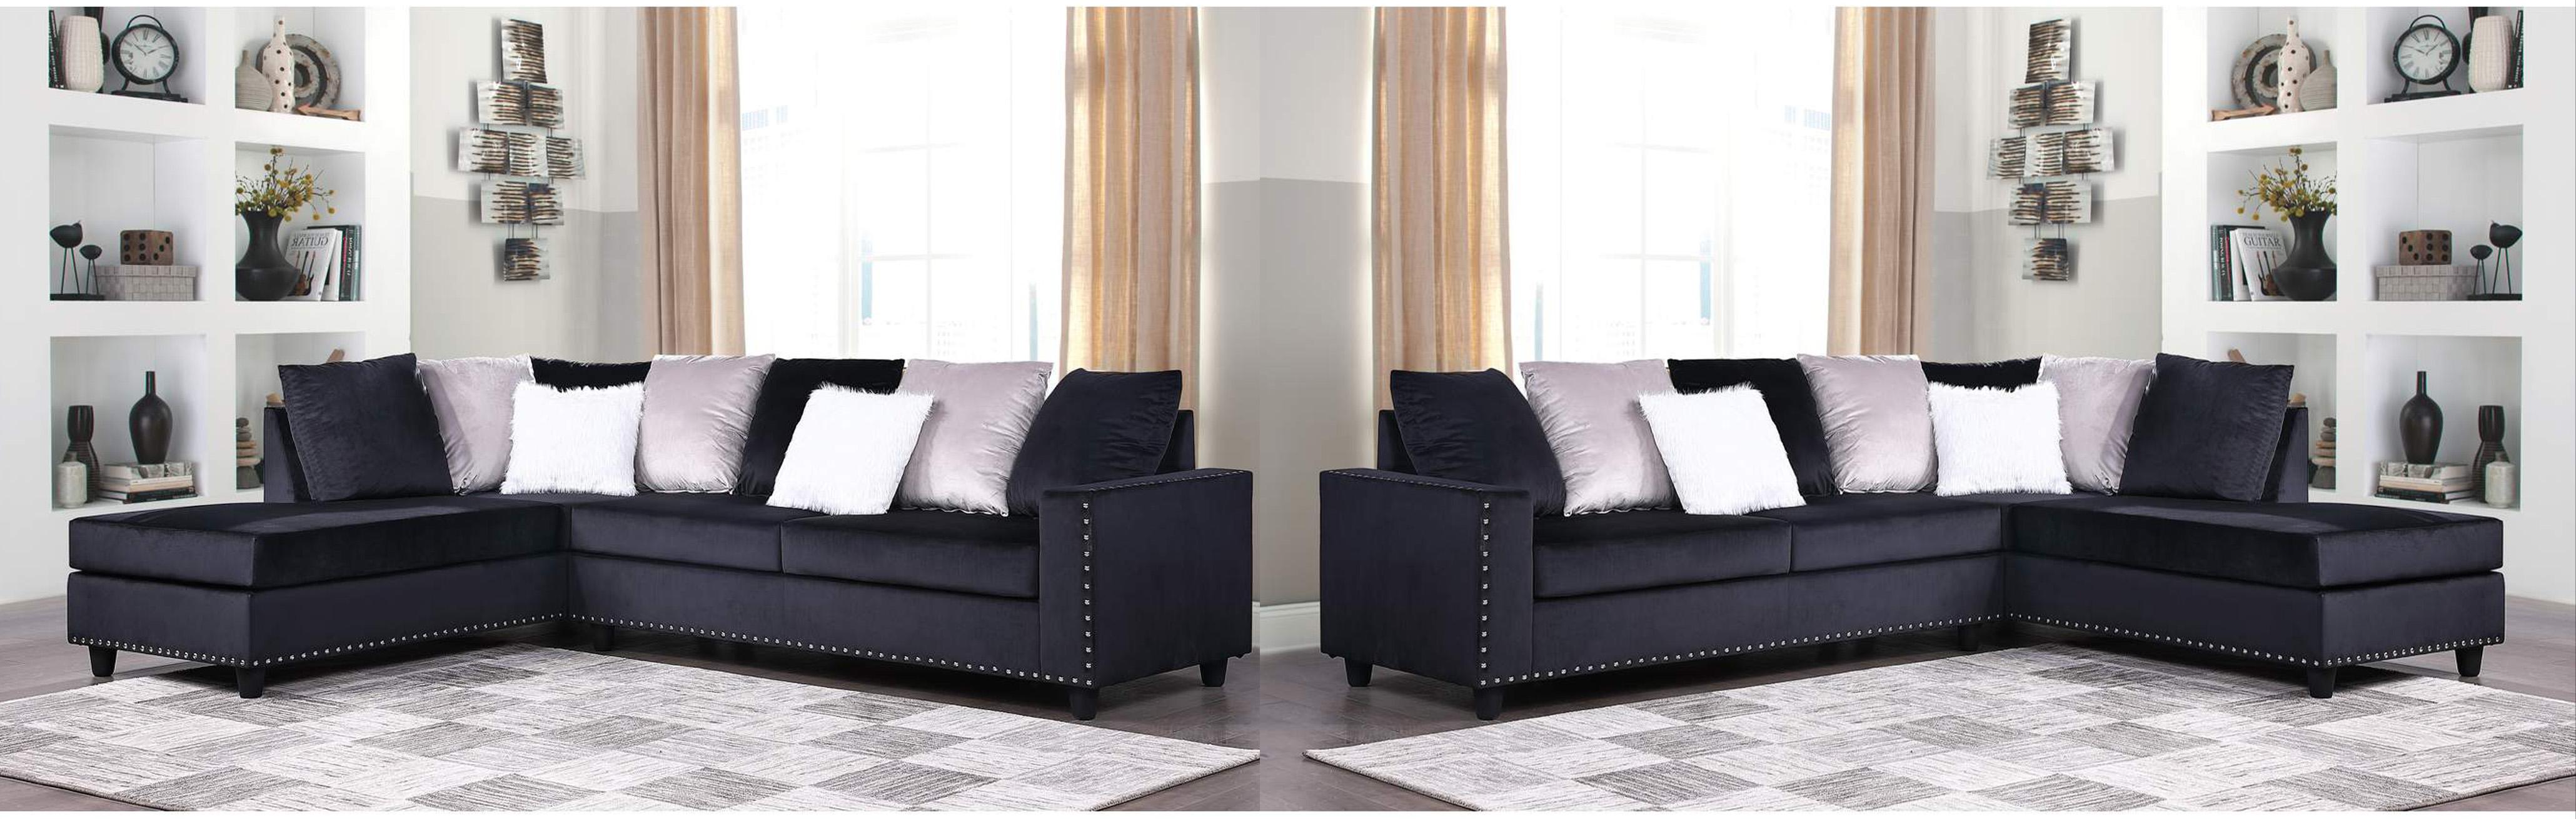 

    
Glam Black Fabric Sectional Sofa MARTHA Galaxy Home Contemporary Modern
